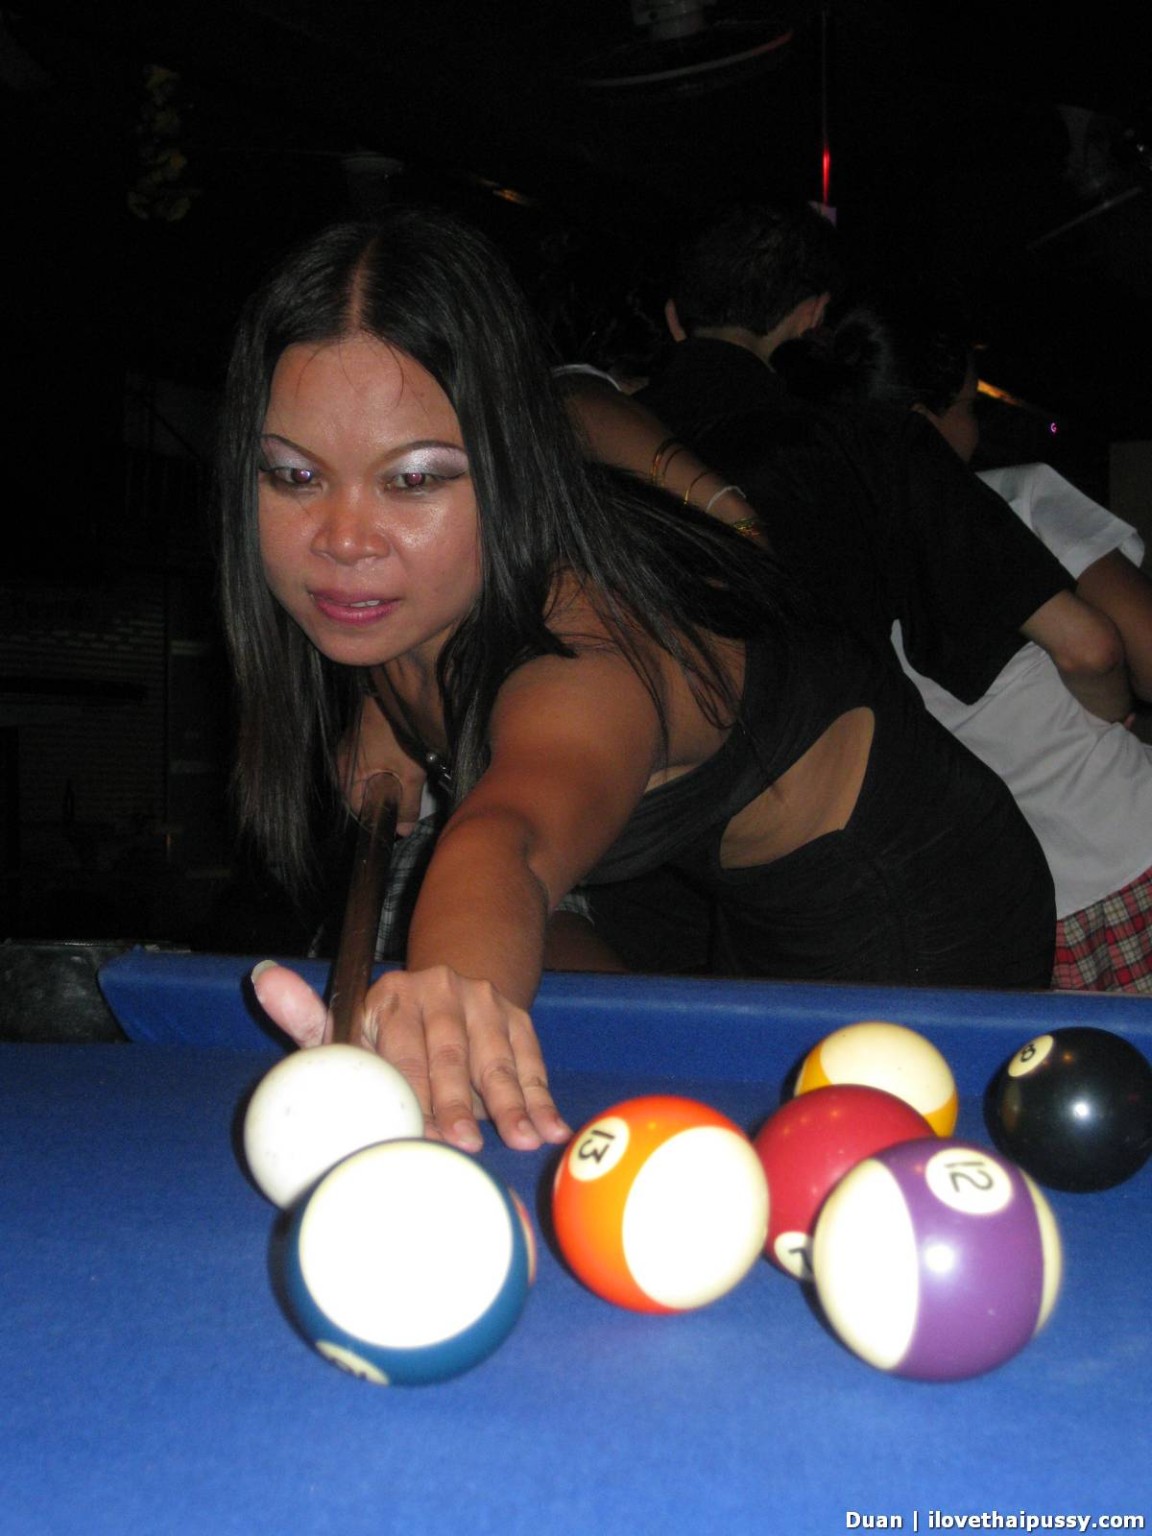 Thai Bargirl Plays Billards And Sucks Tourist Cock For Cash #69938920